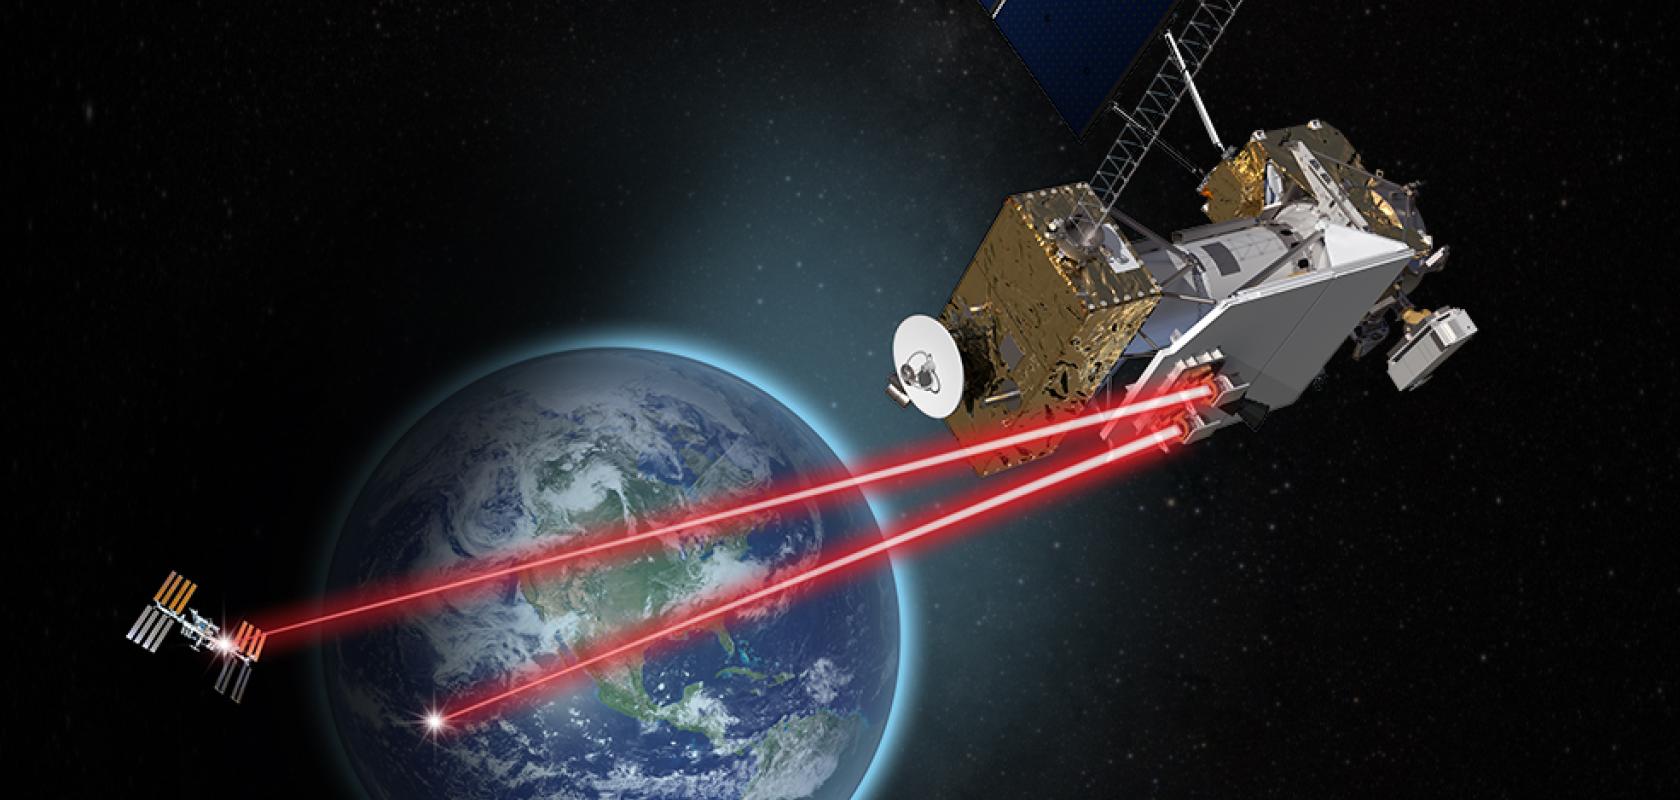 Nasa's Laser Communications Relay Demonstration